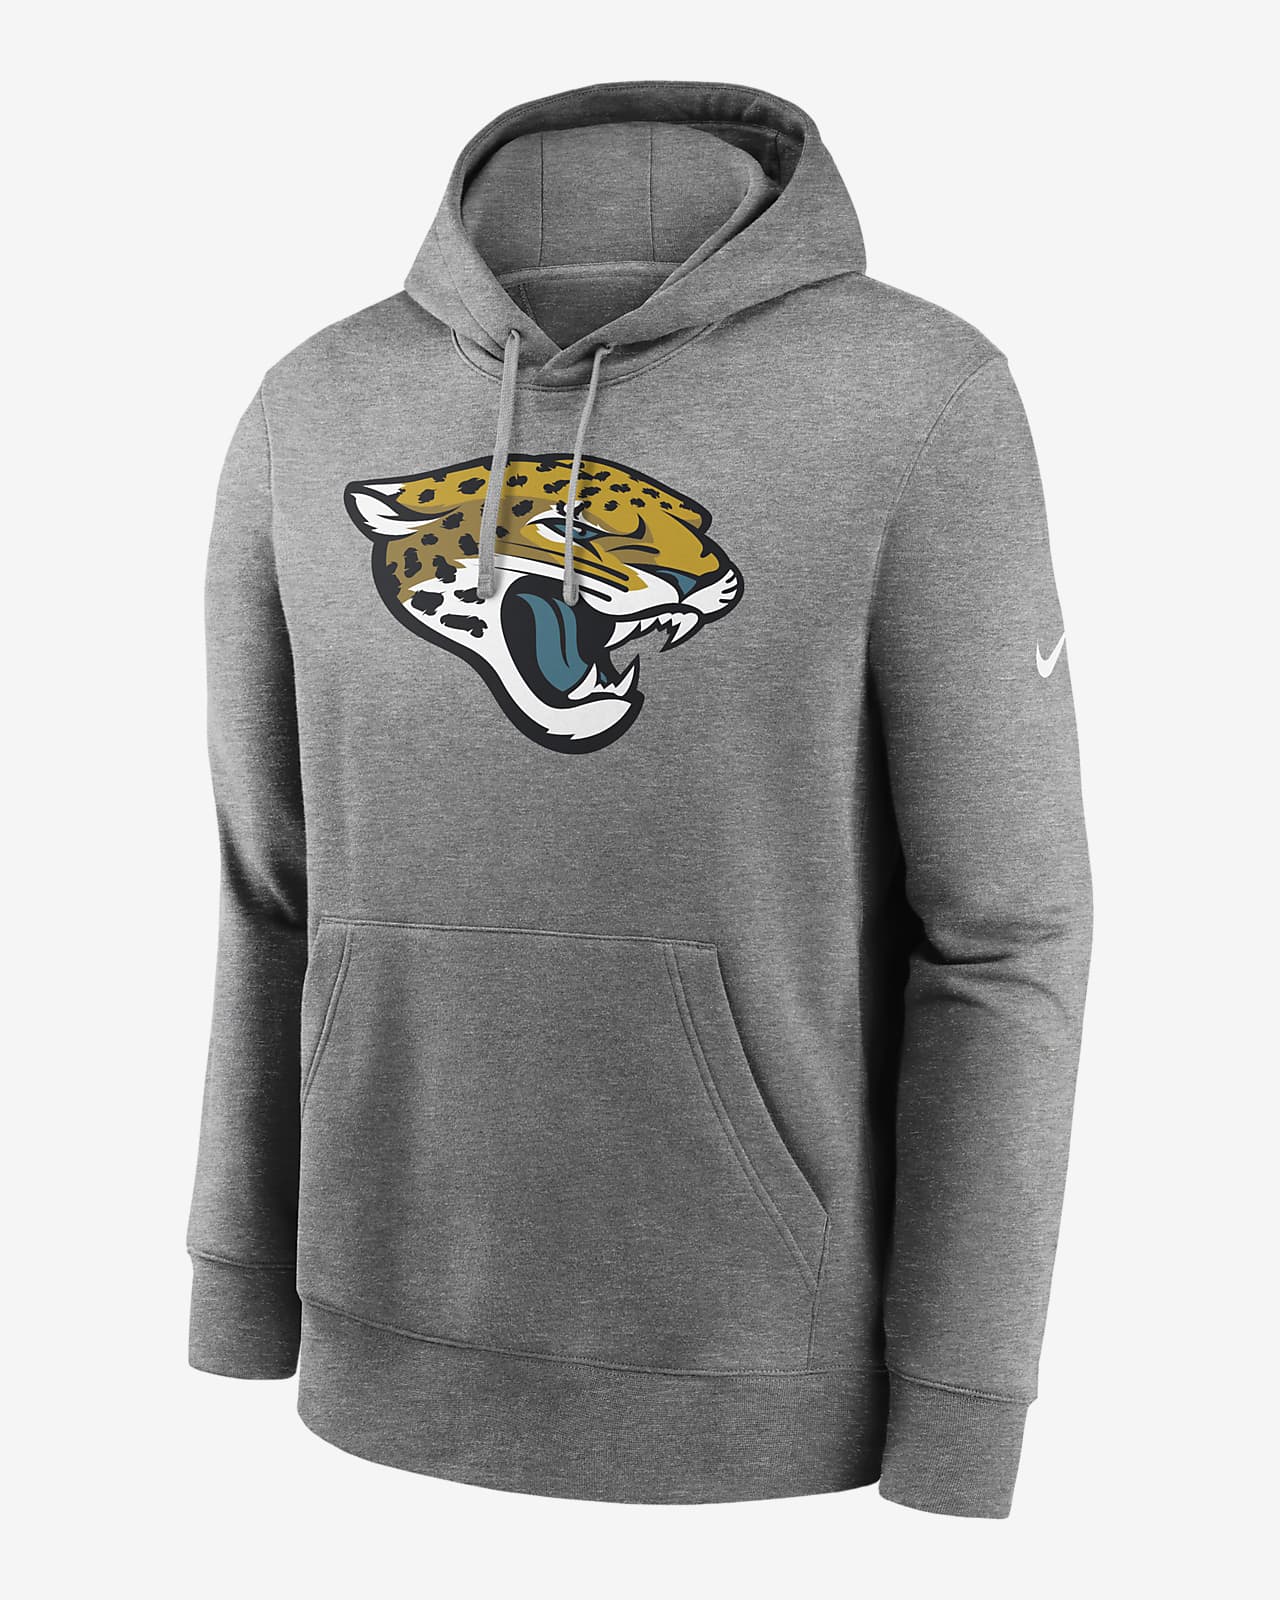 jacksonville jaguars nike hoodie